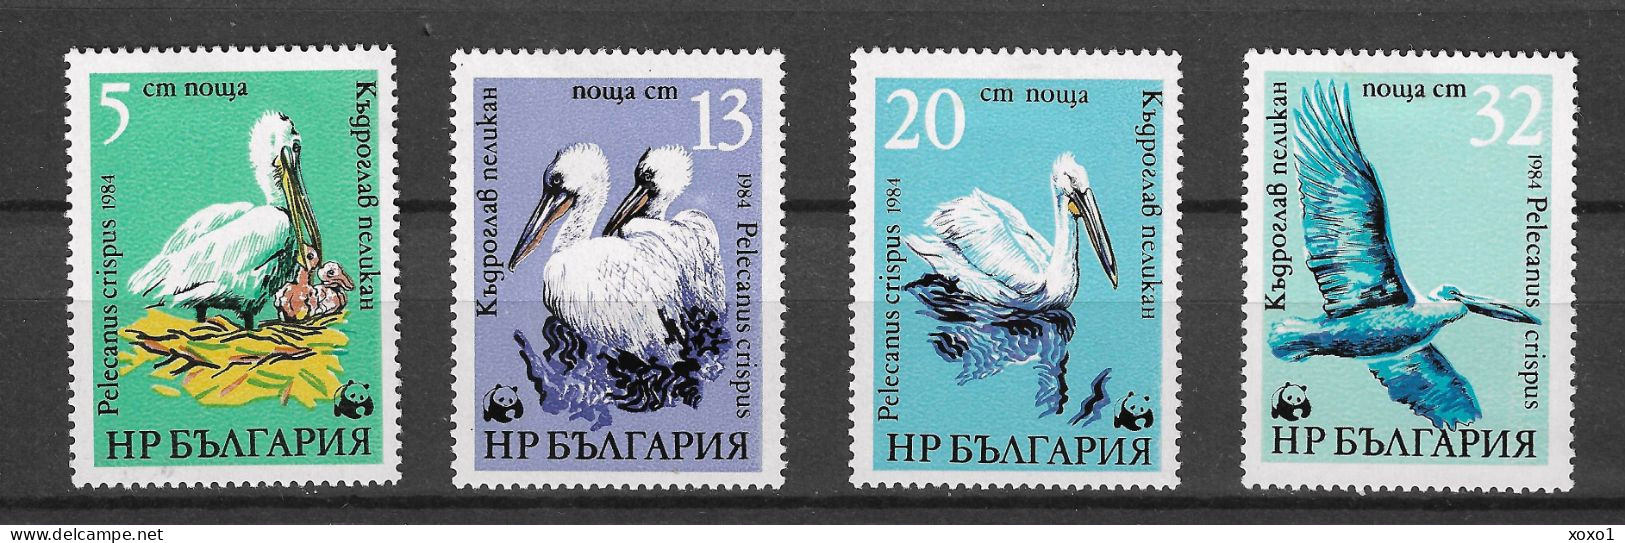 Bulgaria 1984 MiNr. 3303 - 3306 Bulgarien Birds Dalmatian Pelicans WWF 4v MLH * 6.50 € - Pelikane